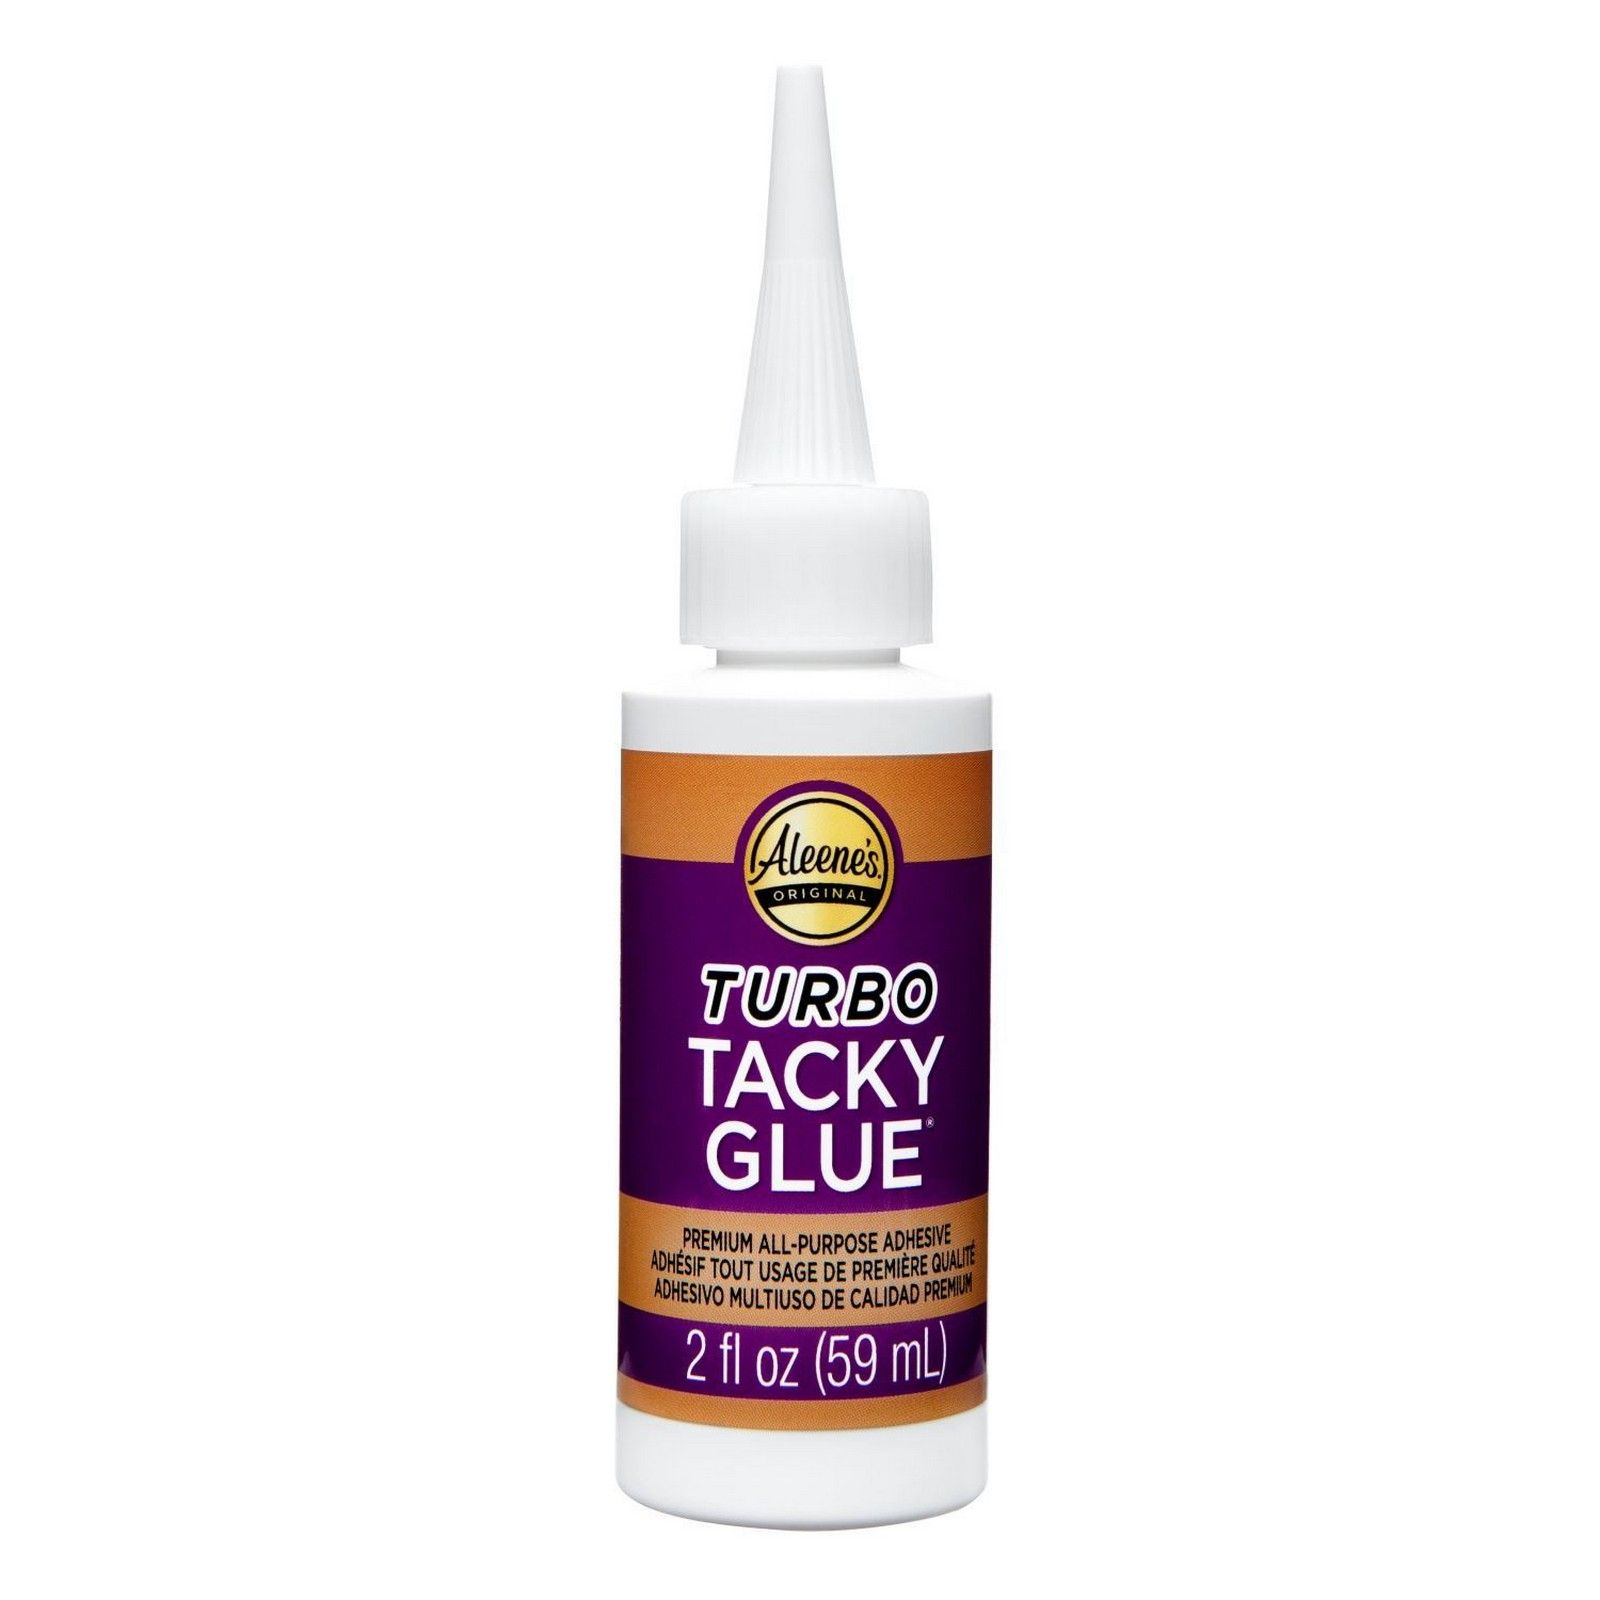 Aleene's • Turbo tacky glue 59ml